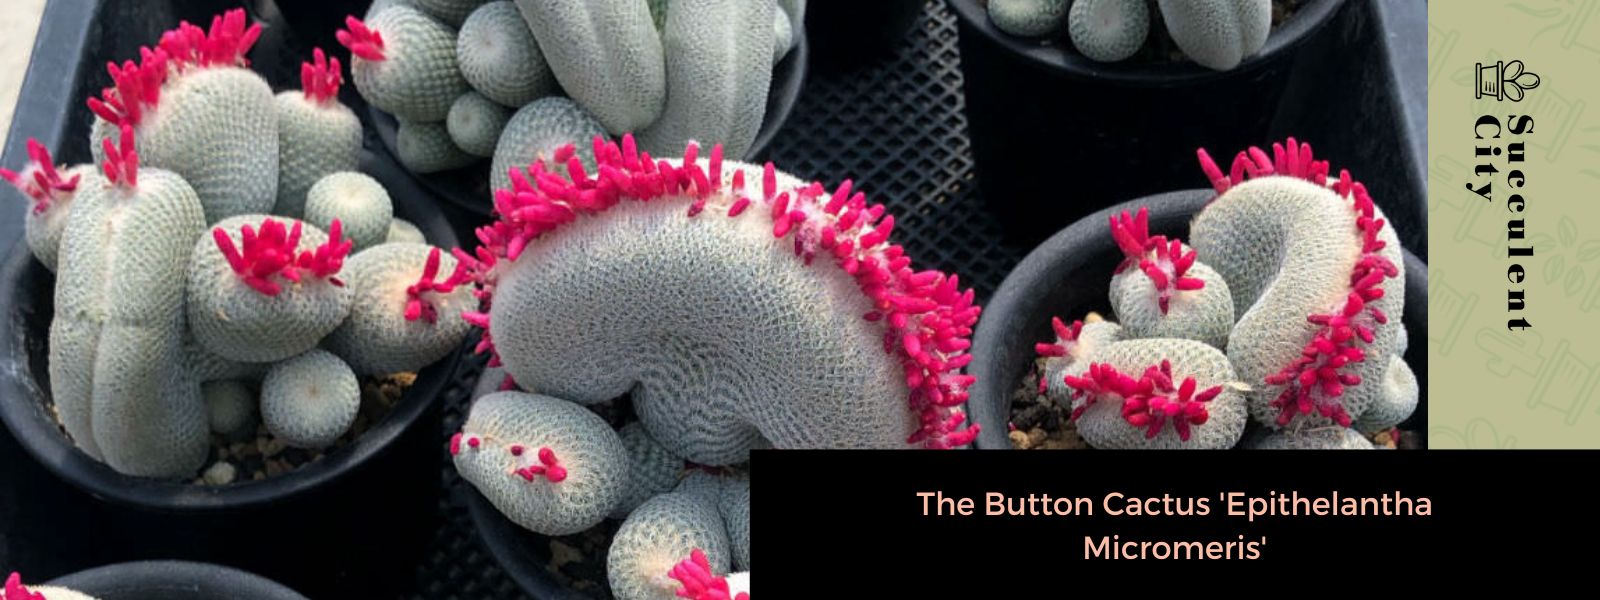 El cactus botón 'Epithelantha micromeris'